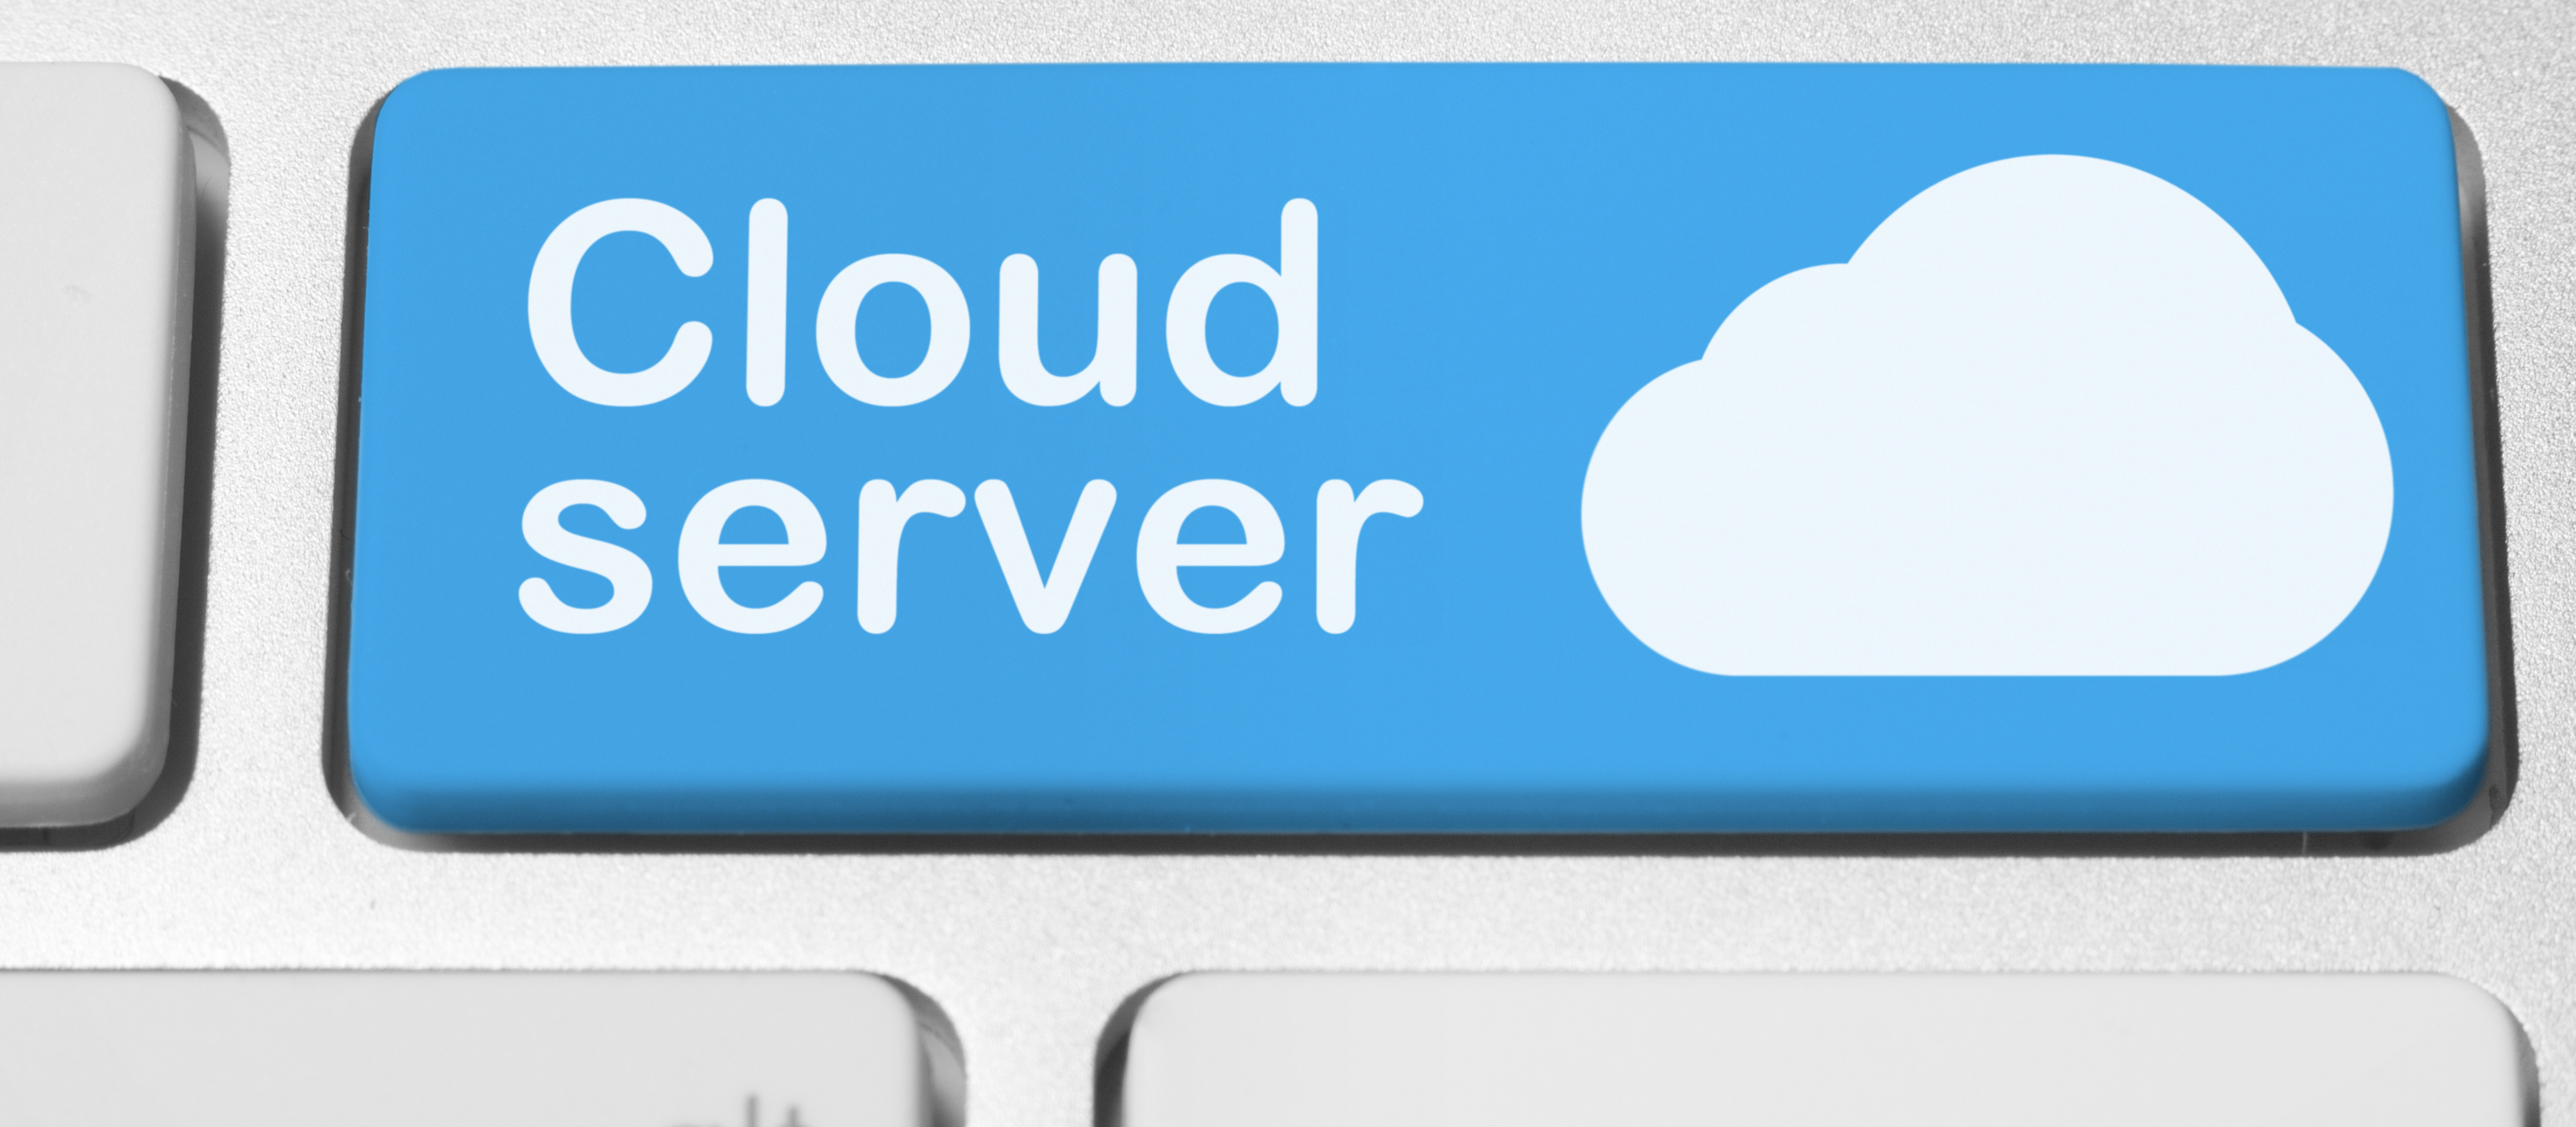 Cloud Server image keyboard